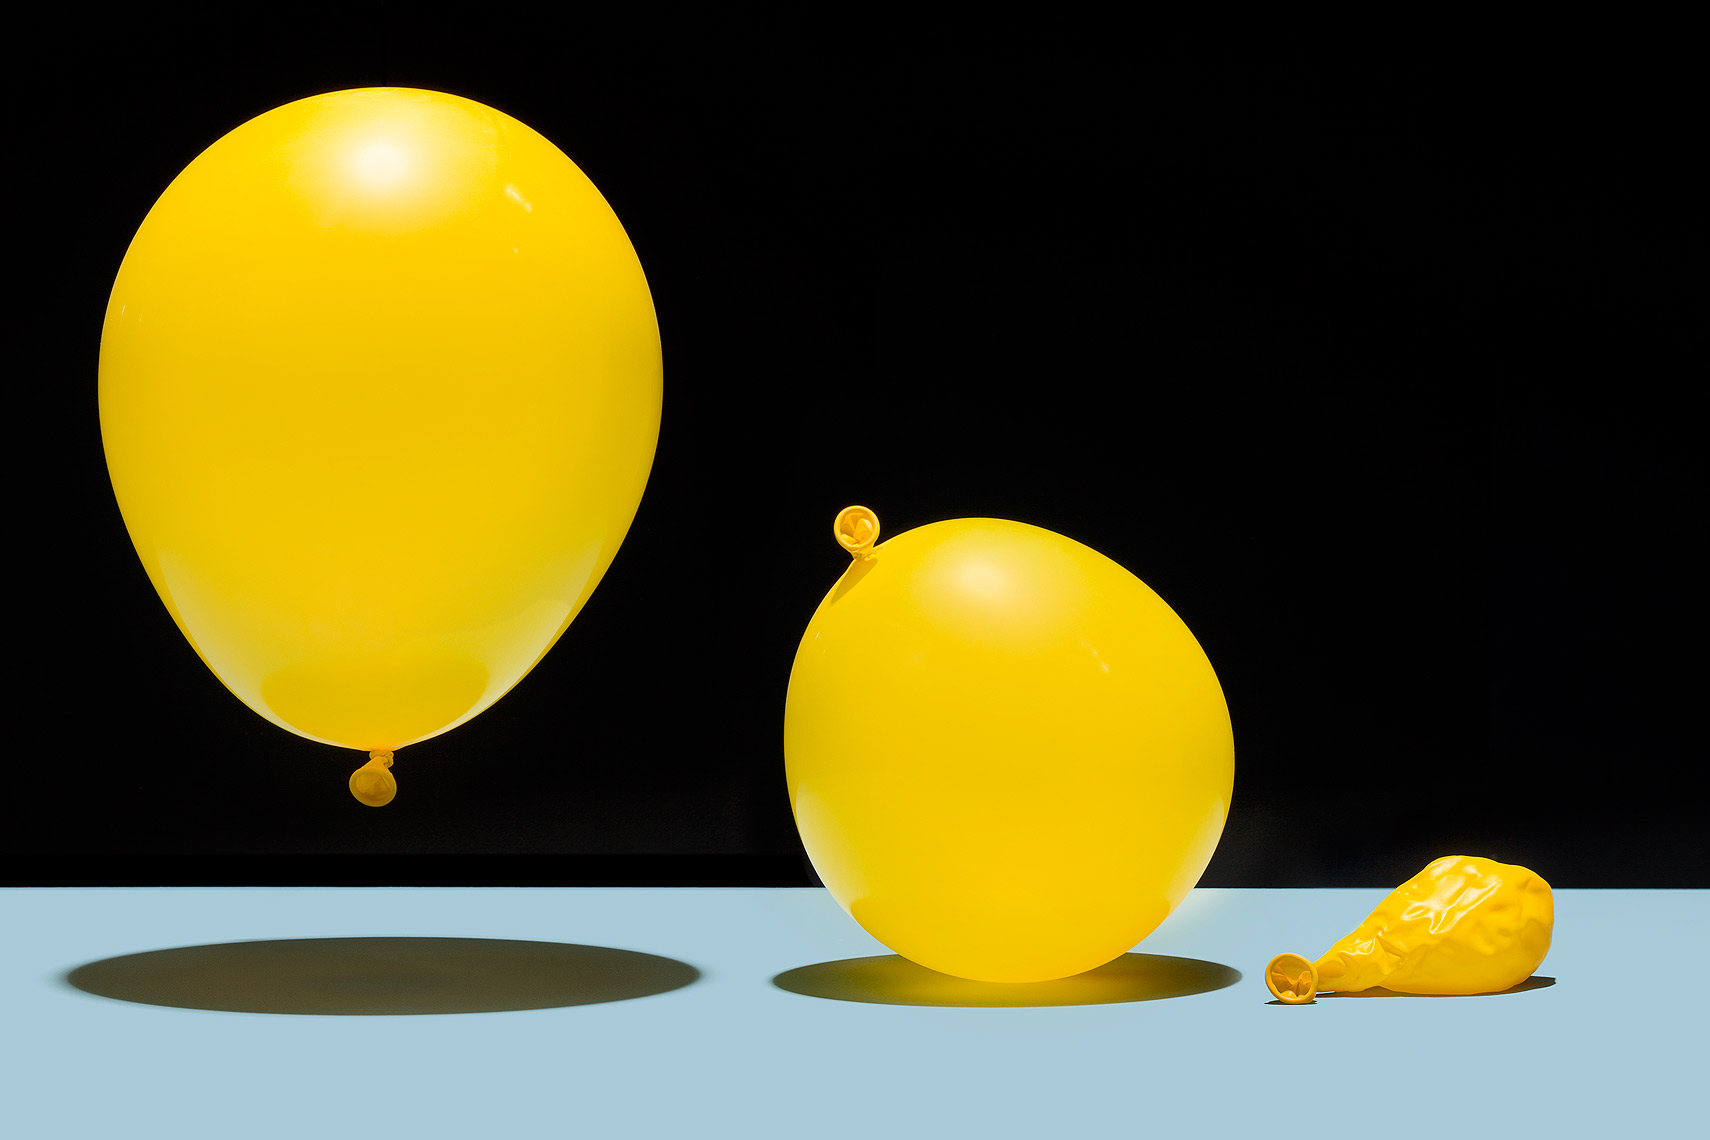 Balloons deflating photo by John Kuczala